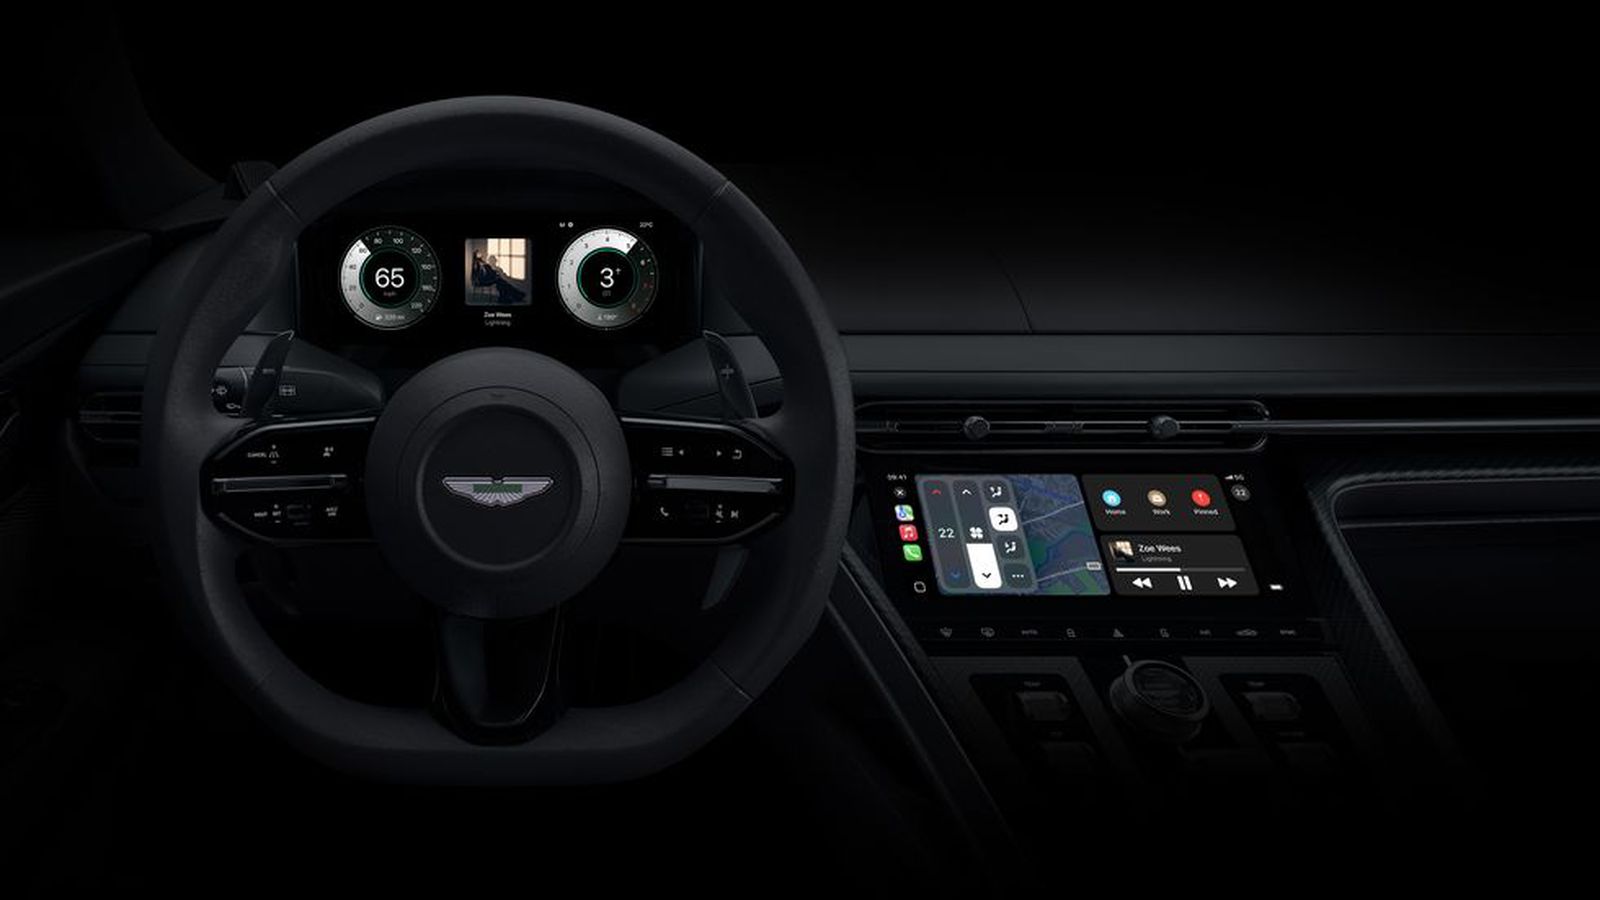 Aston Martin carplay 2.0